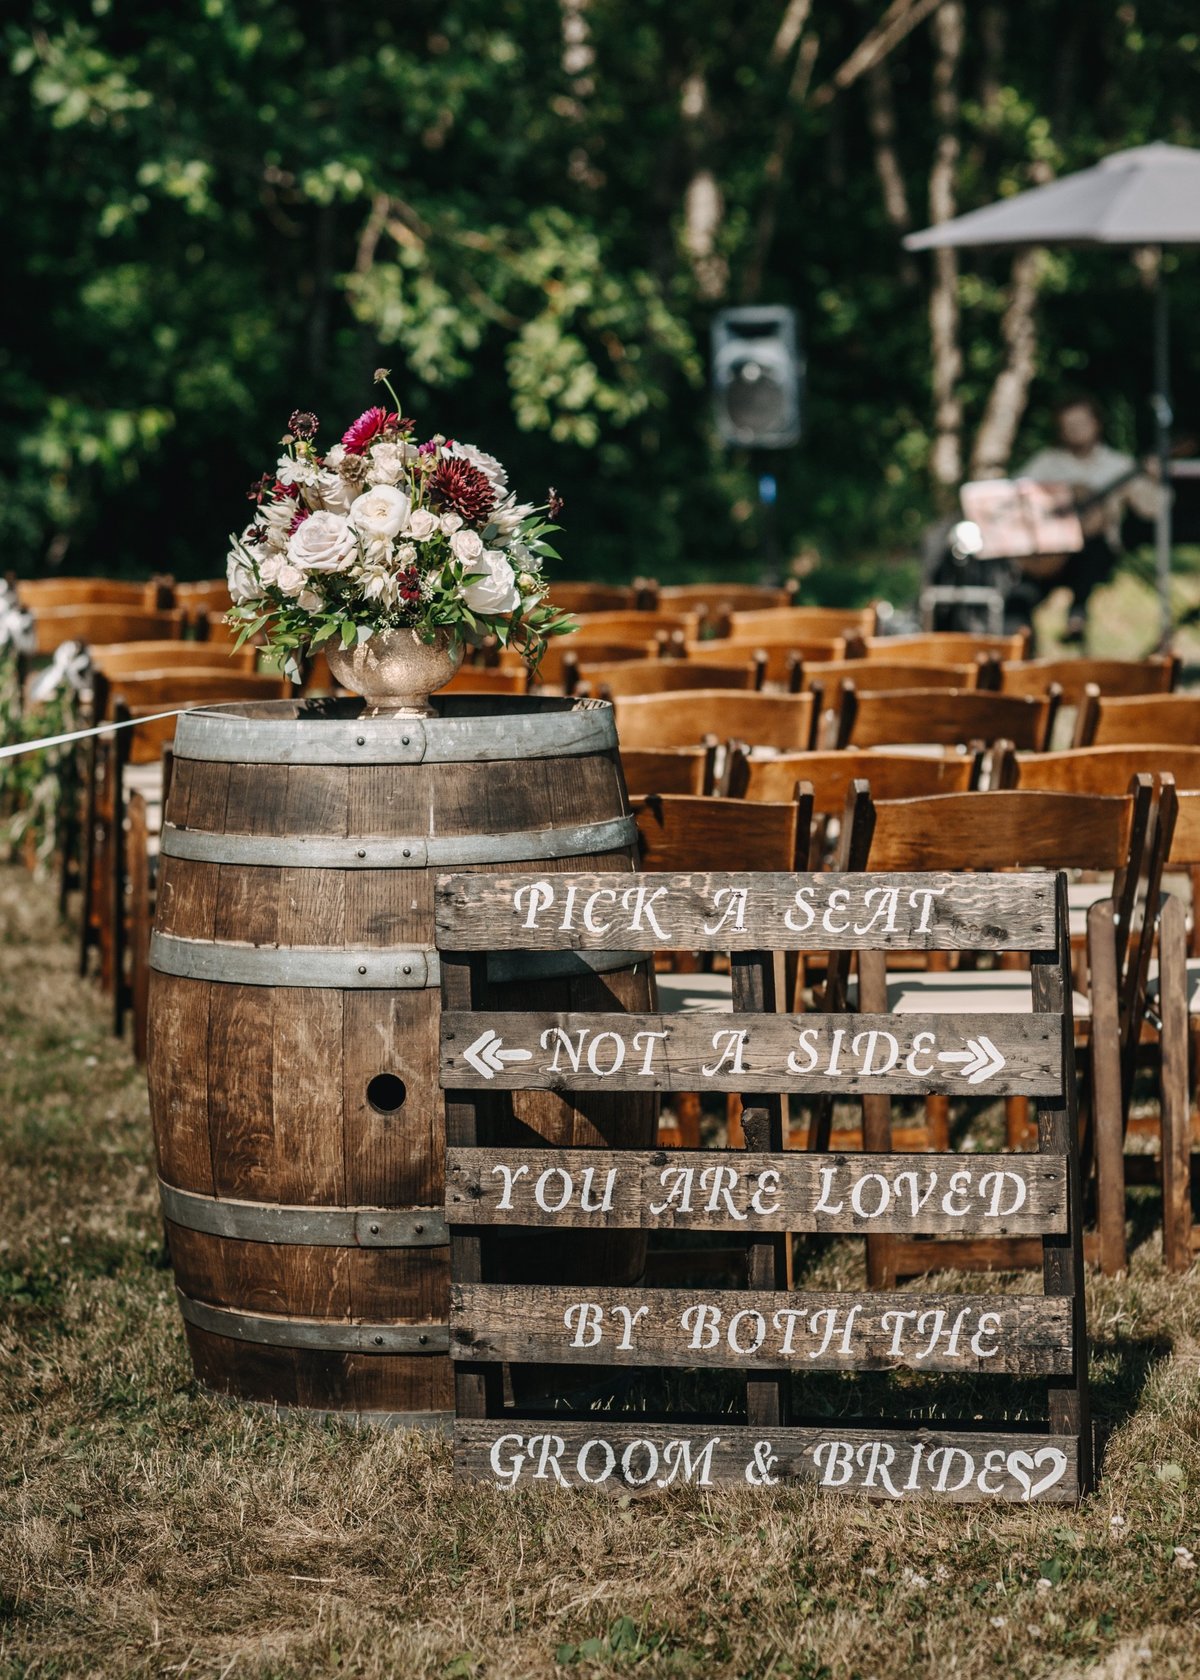 BKC4U WEDDING FLOWERS wine barrel wedding flower arrangement